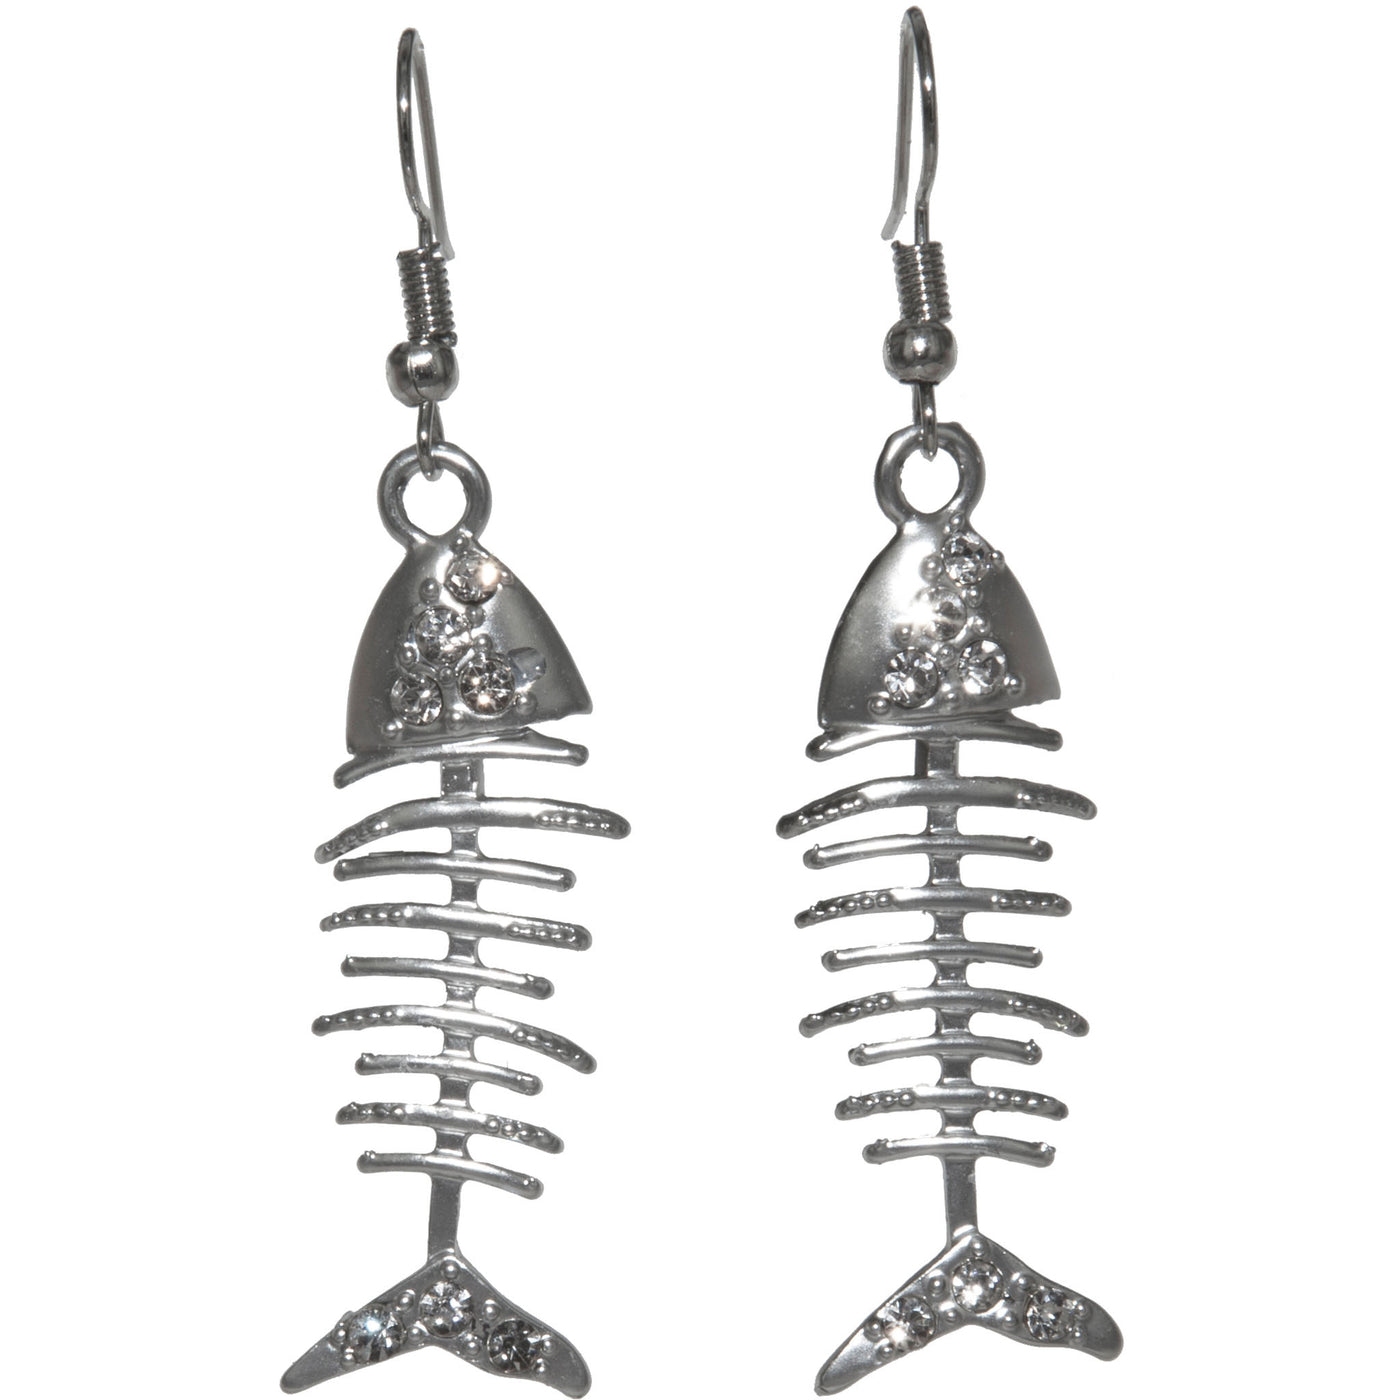 Fishbone earrings